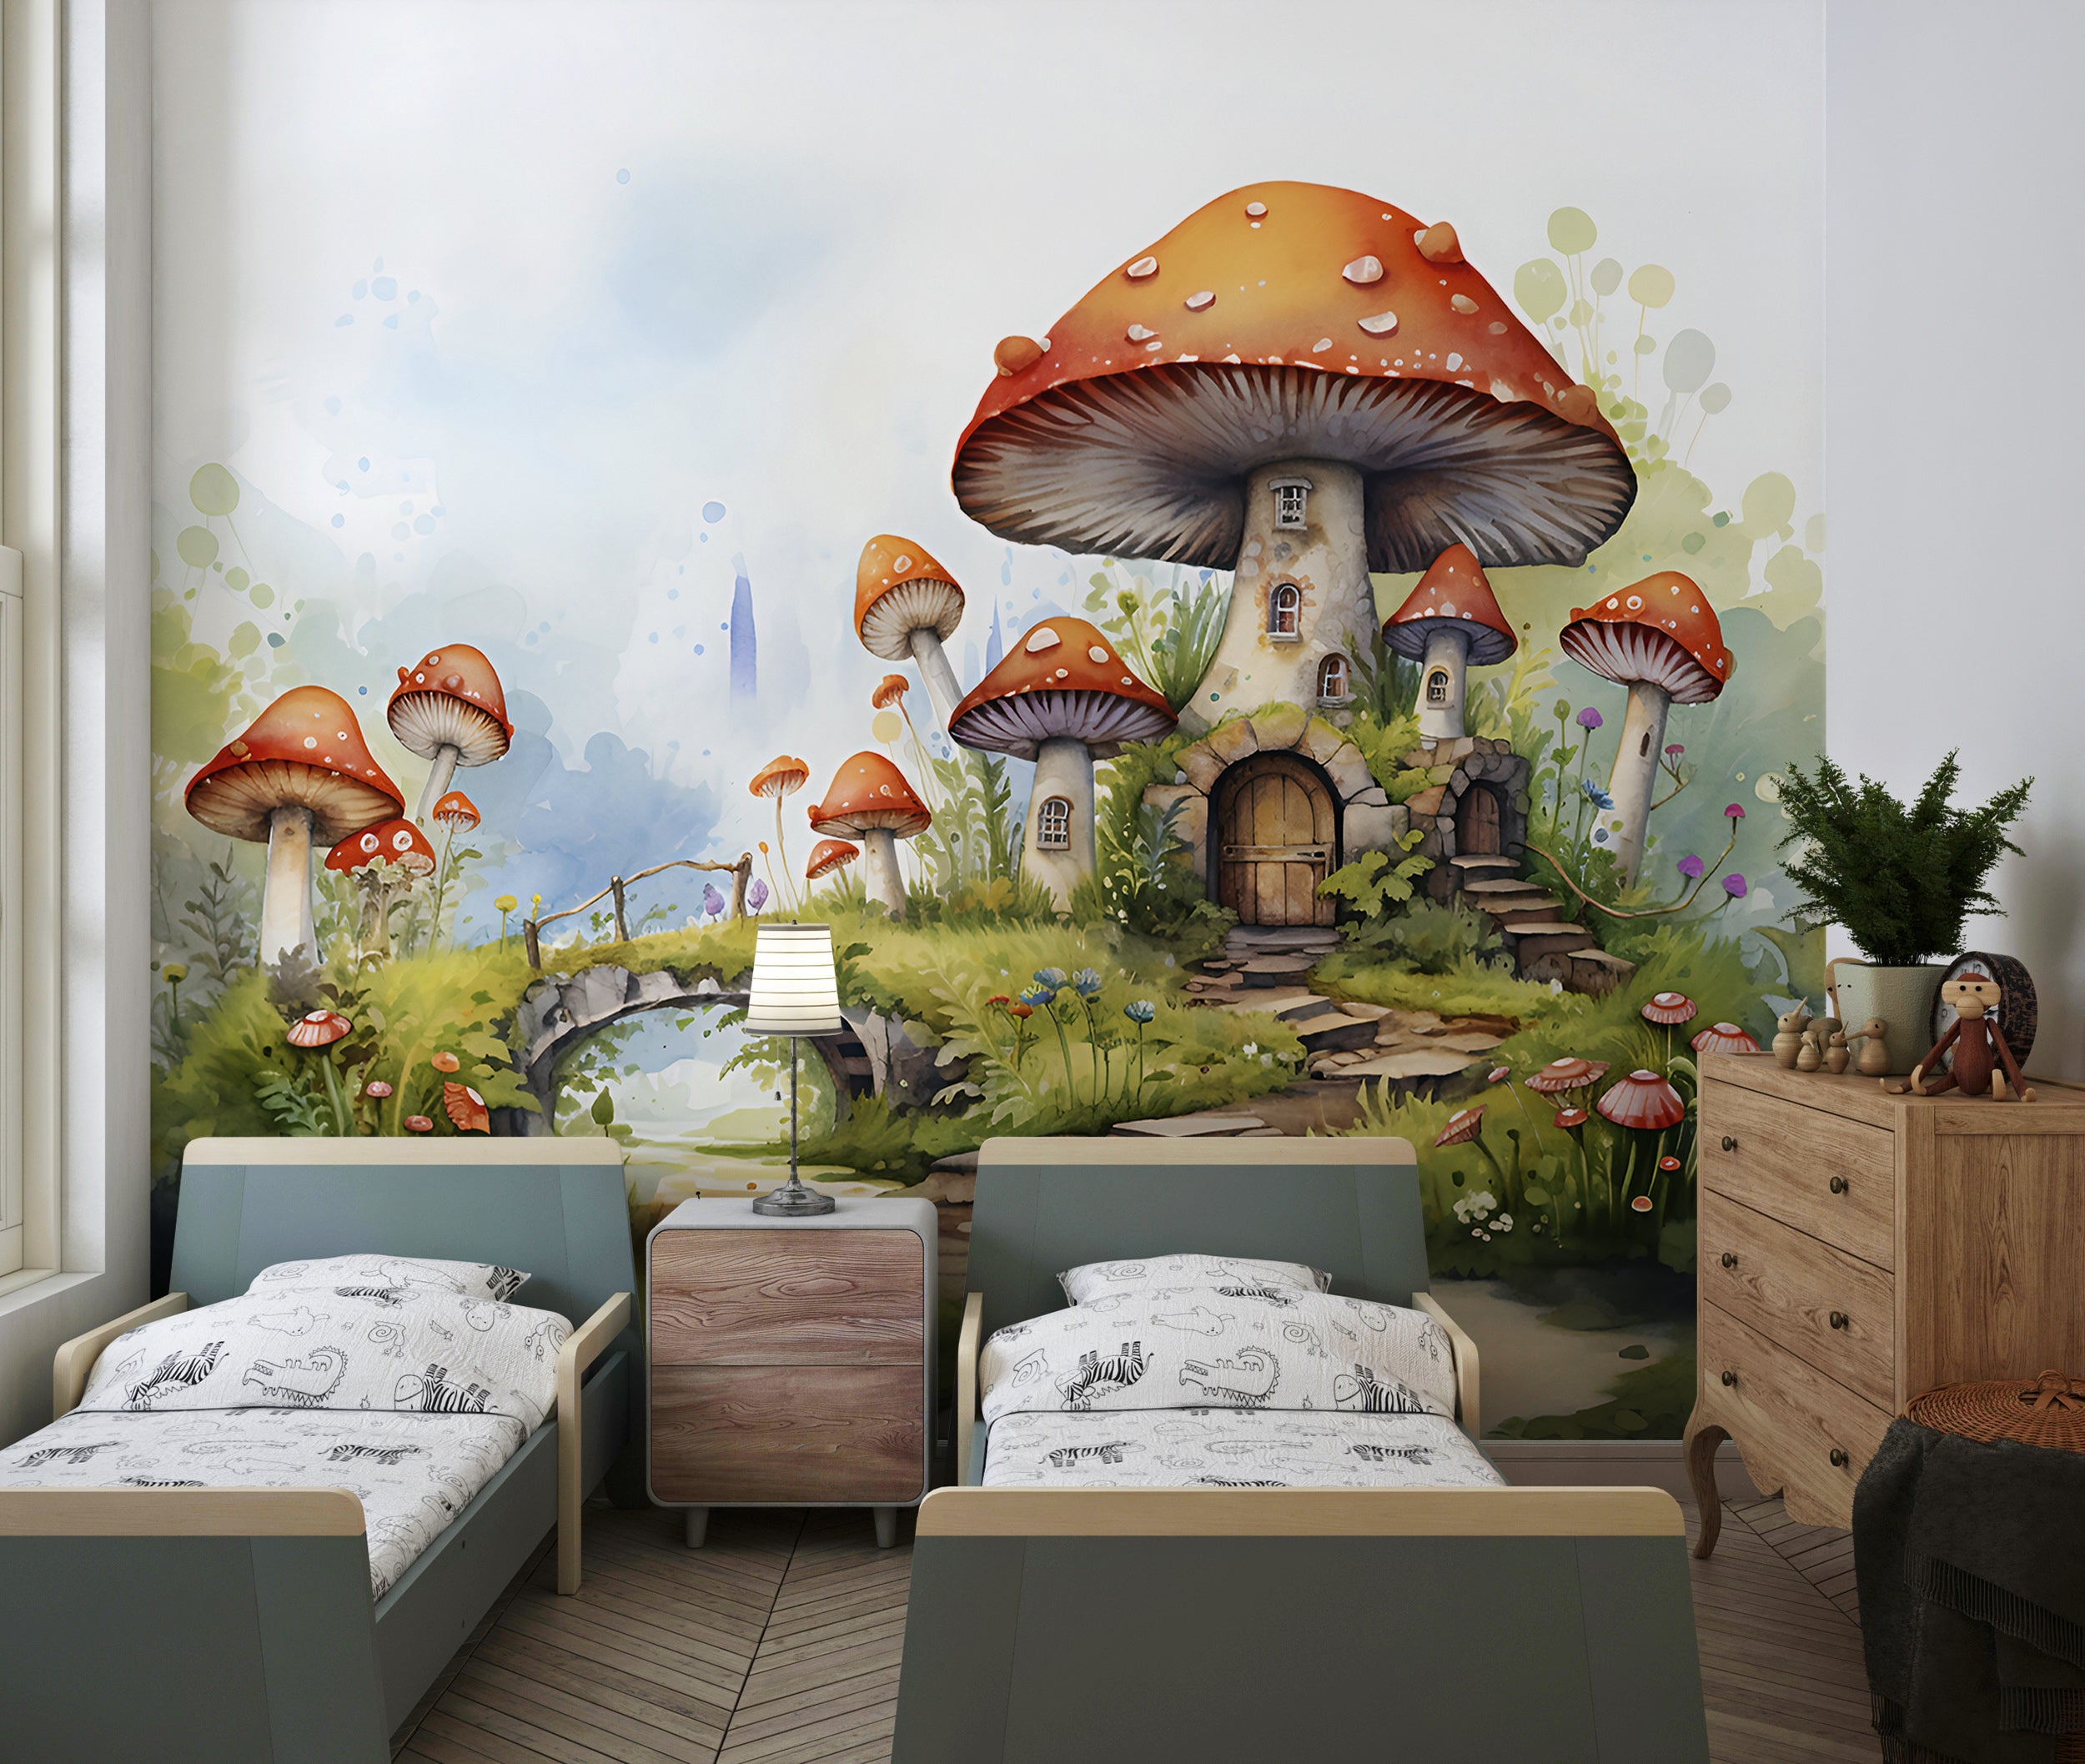 Imaginative Mushroom House Decor